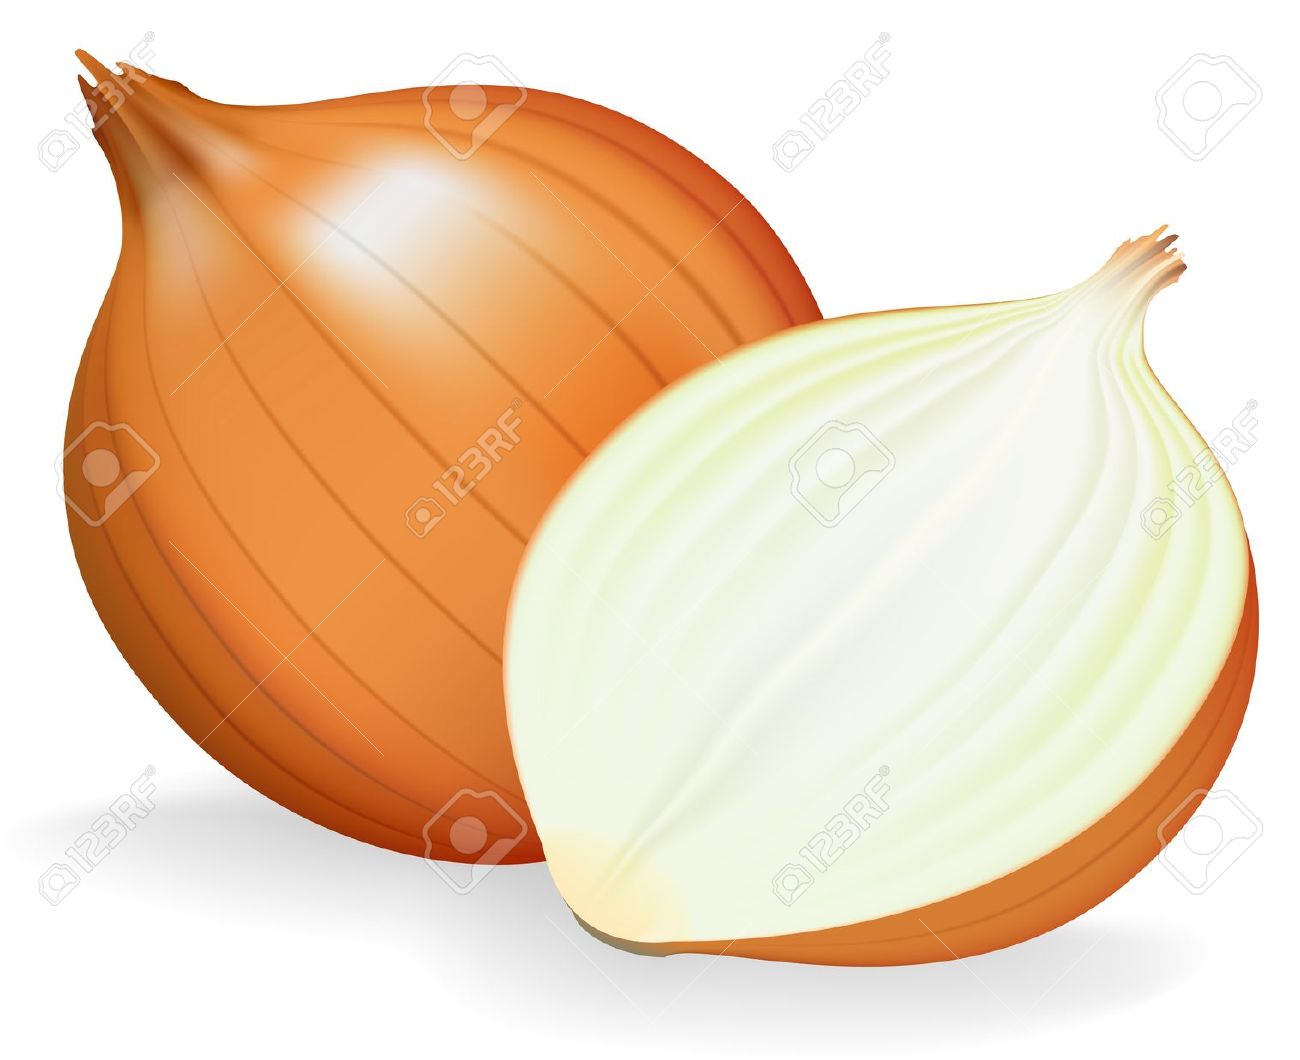 vegetables clipart onion